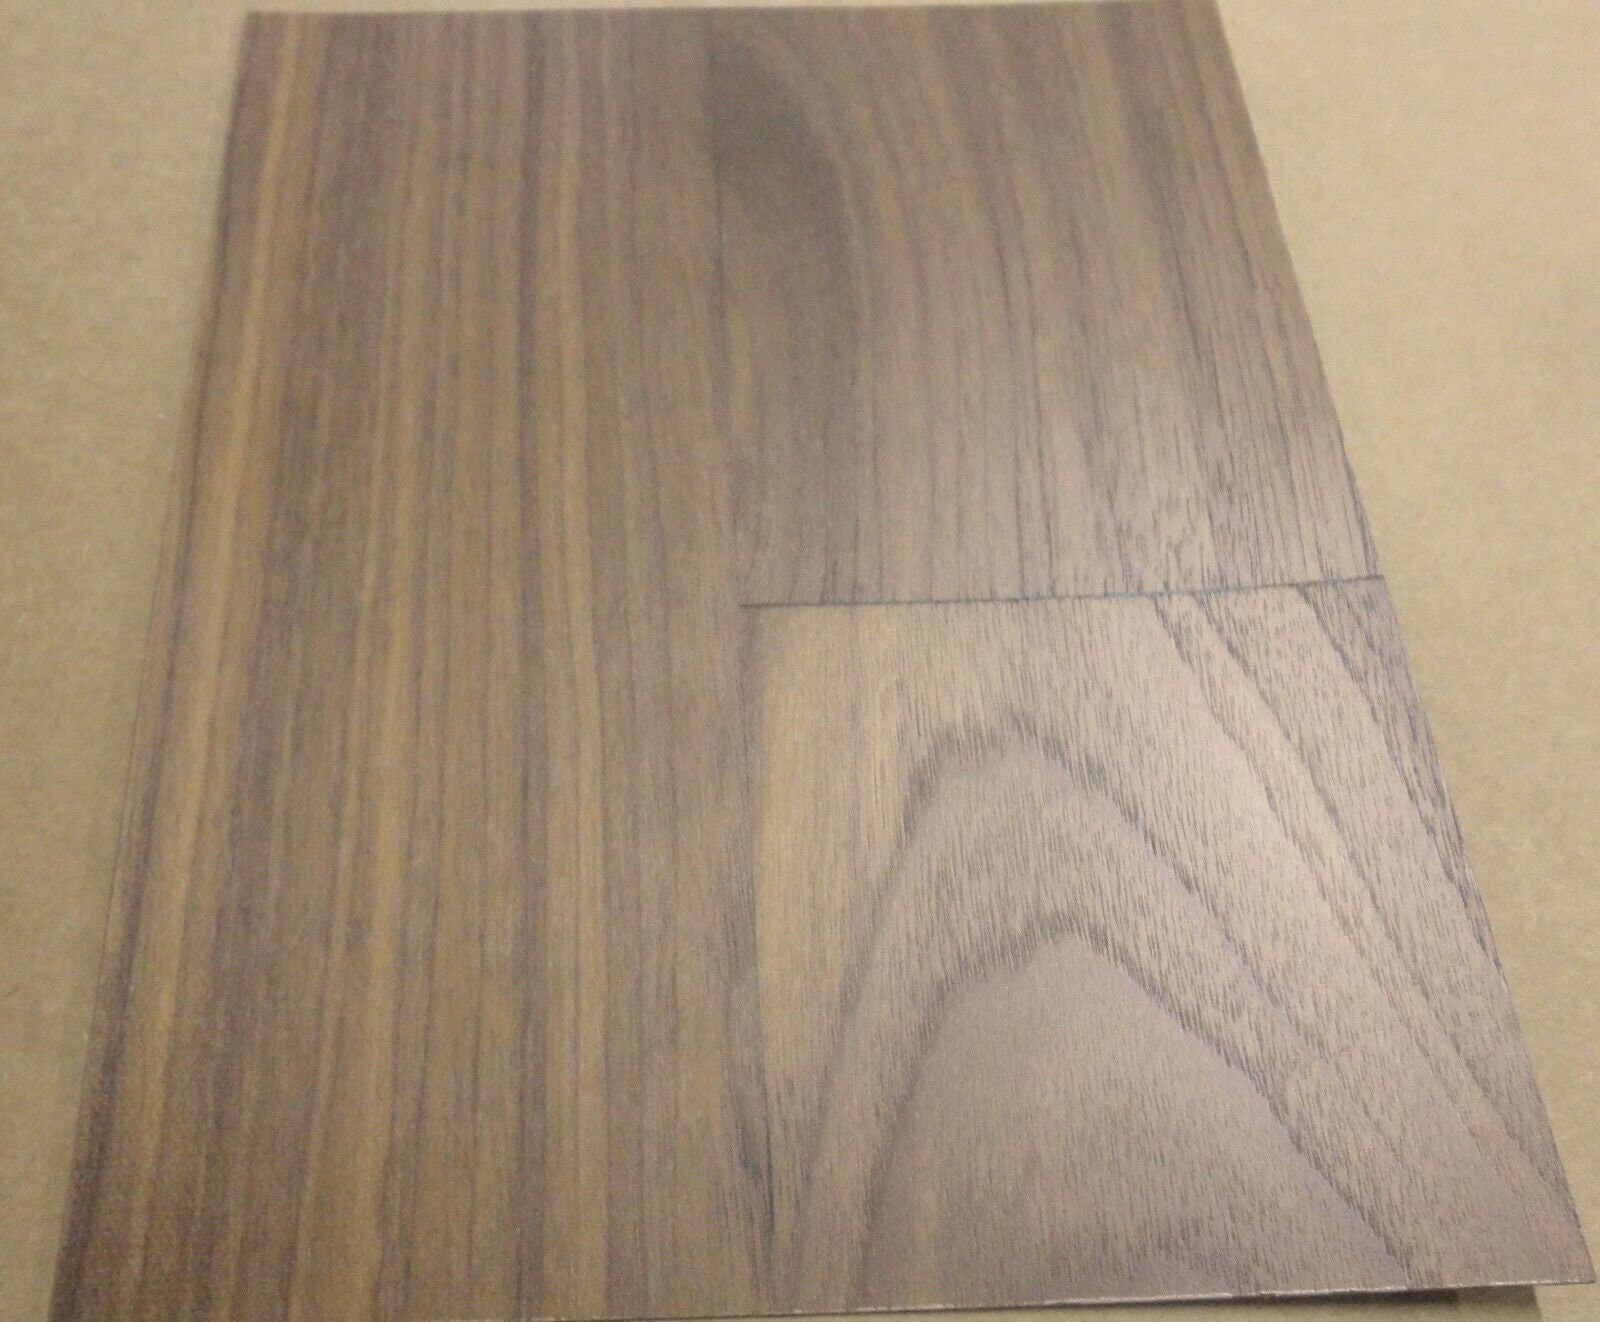 Walnut Wood Veneer Sheet 12 X 12 on Paper Backer 1' X 1' X 1/40 A Grade 